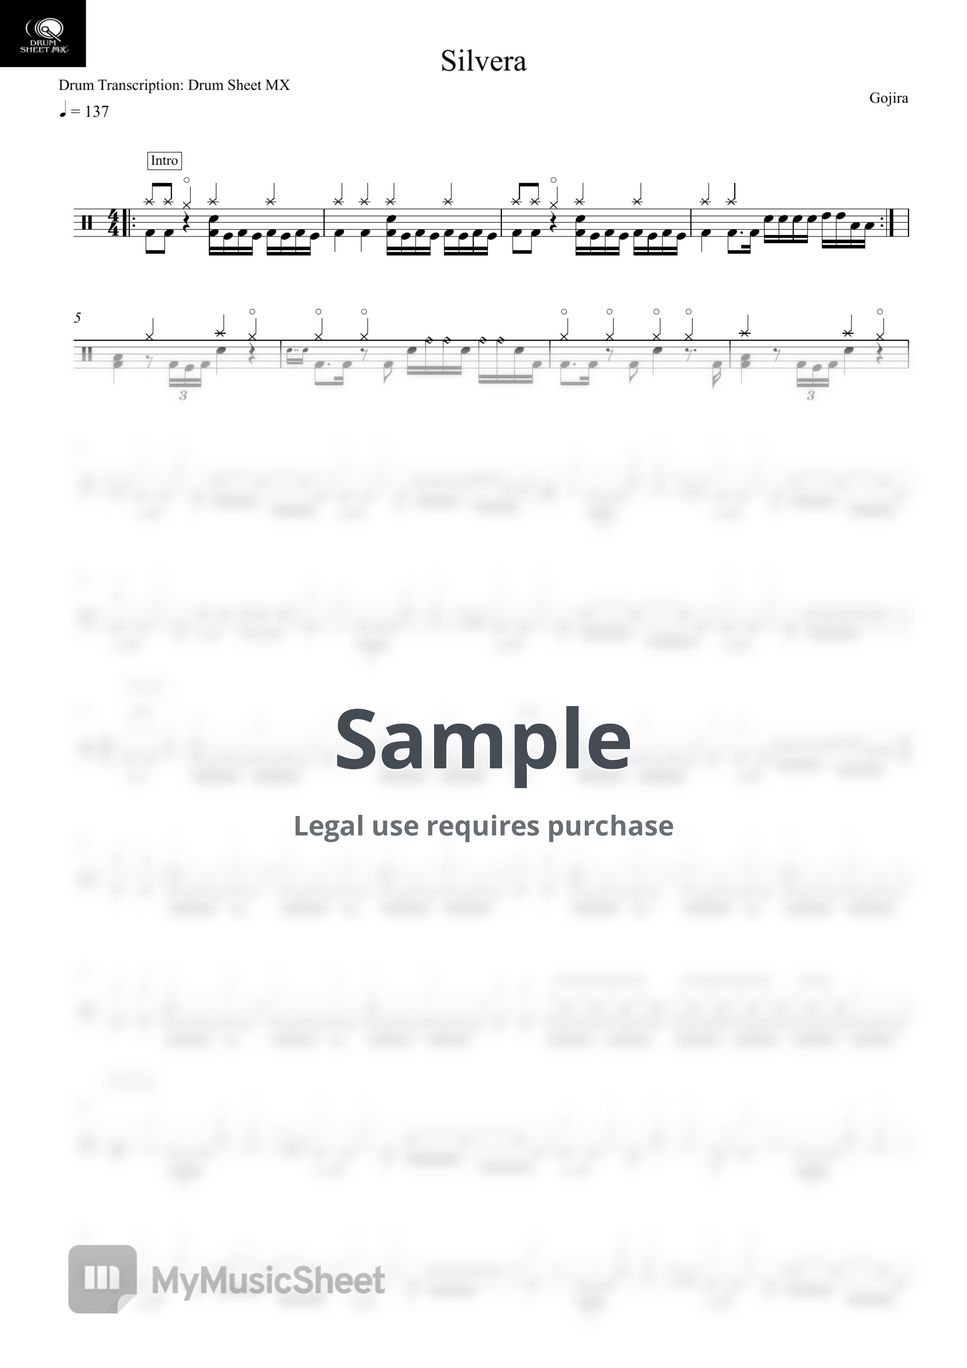 Gojira - Silvera by Drum Transcription: Drum Sheet MX